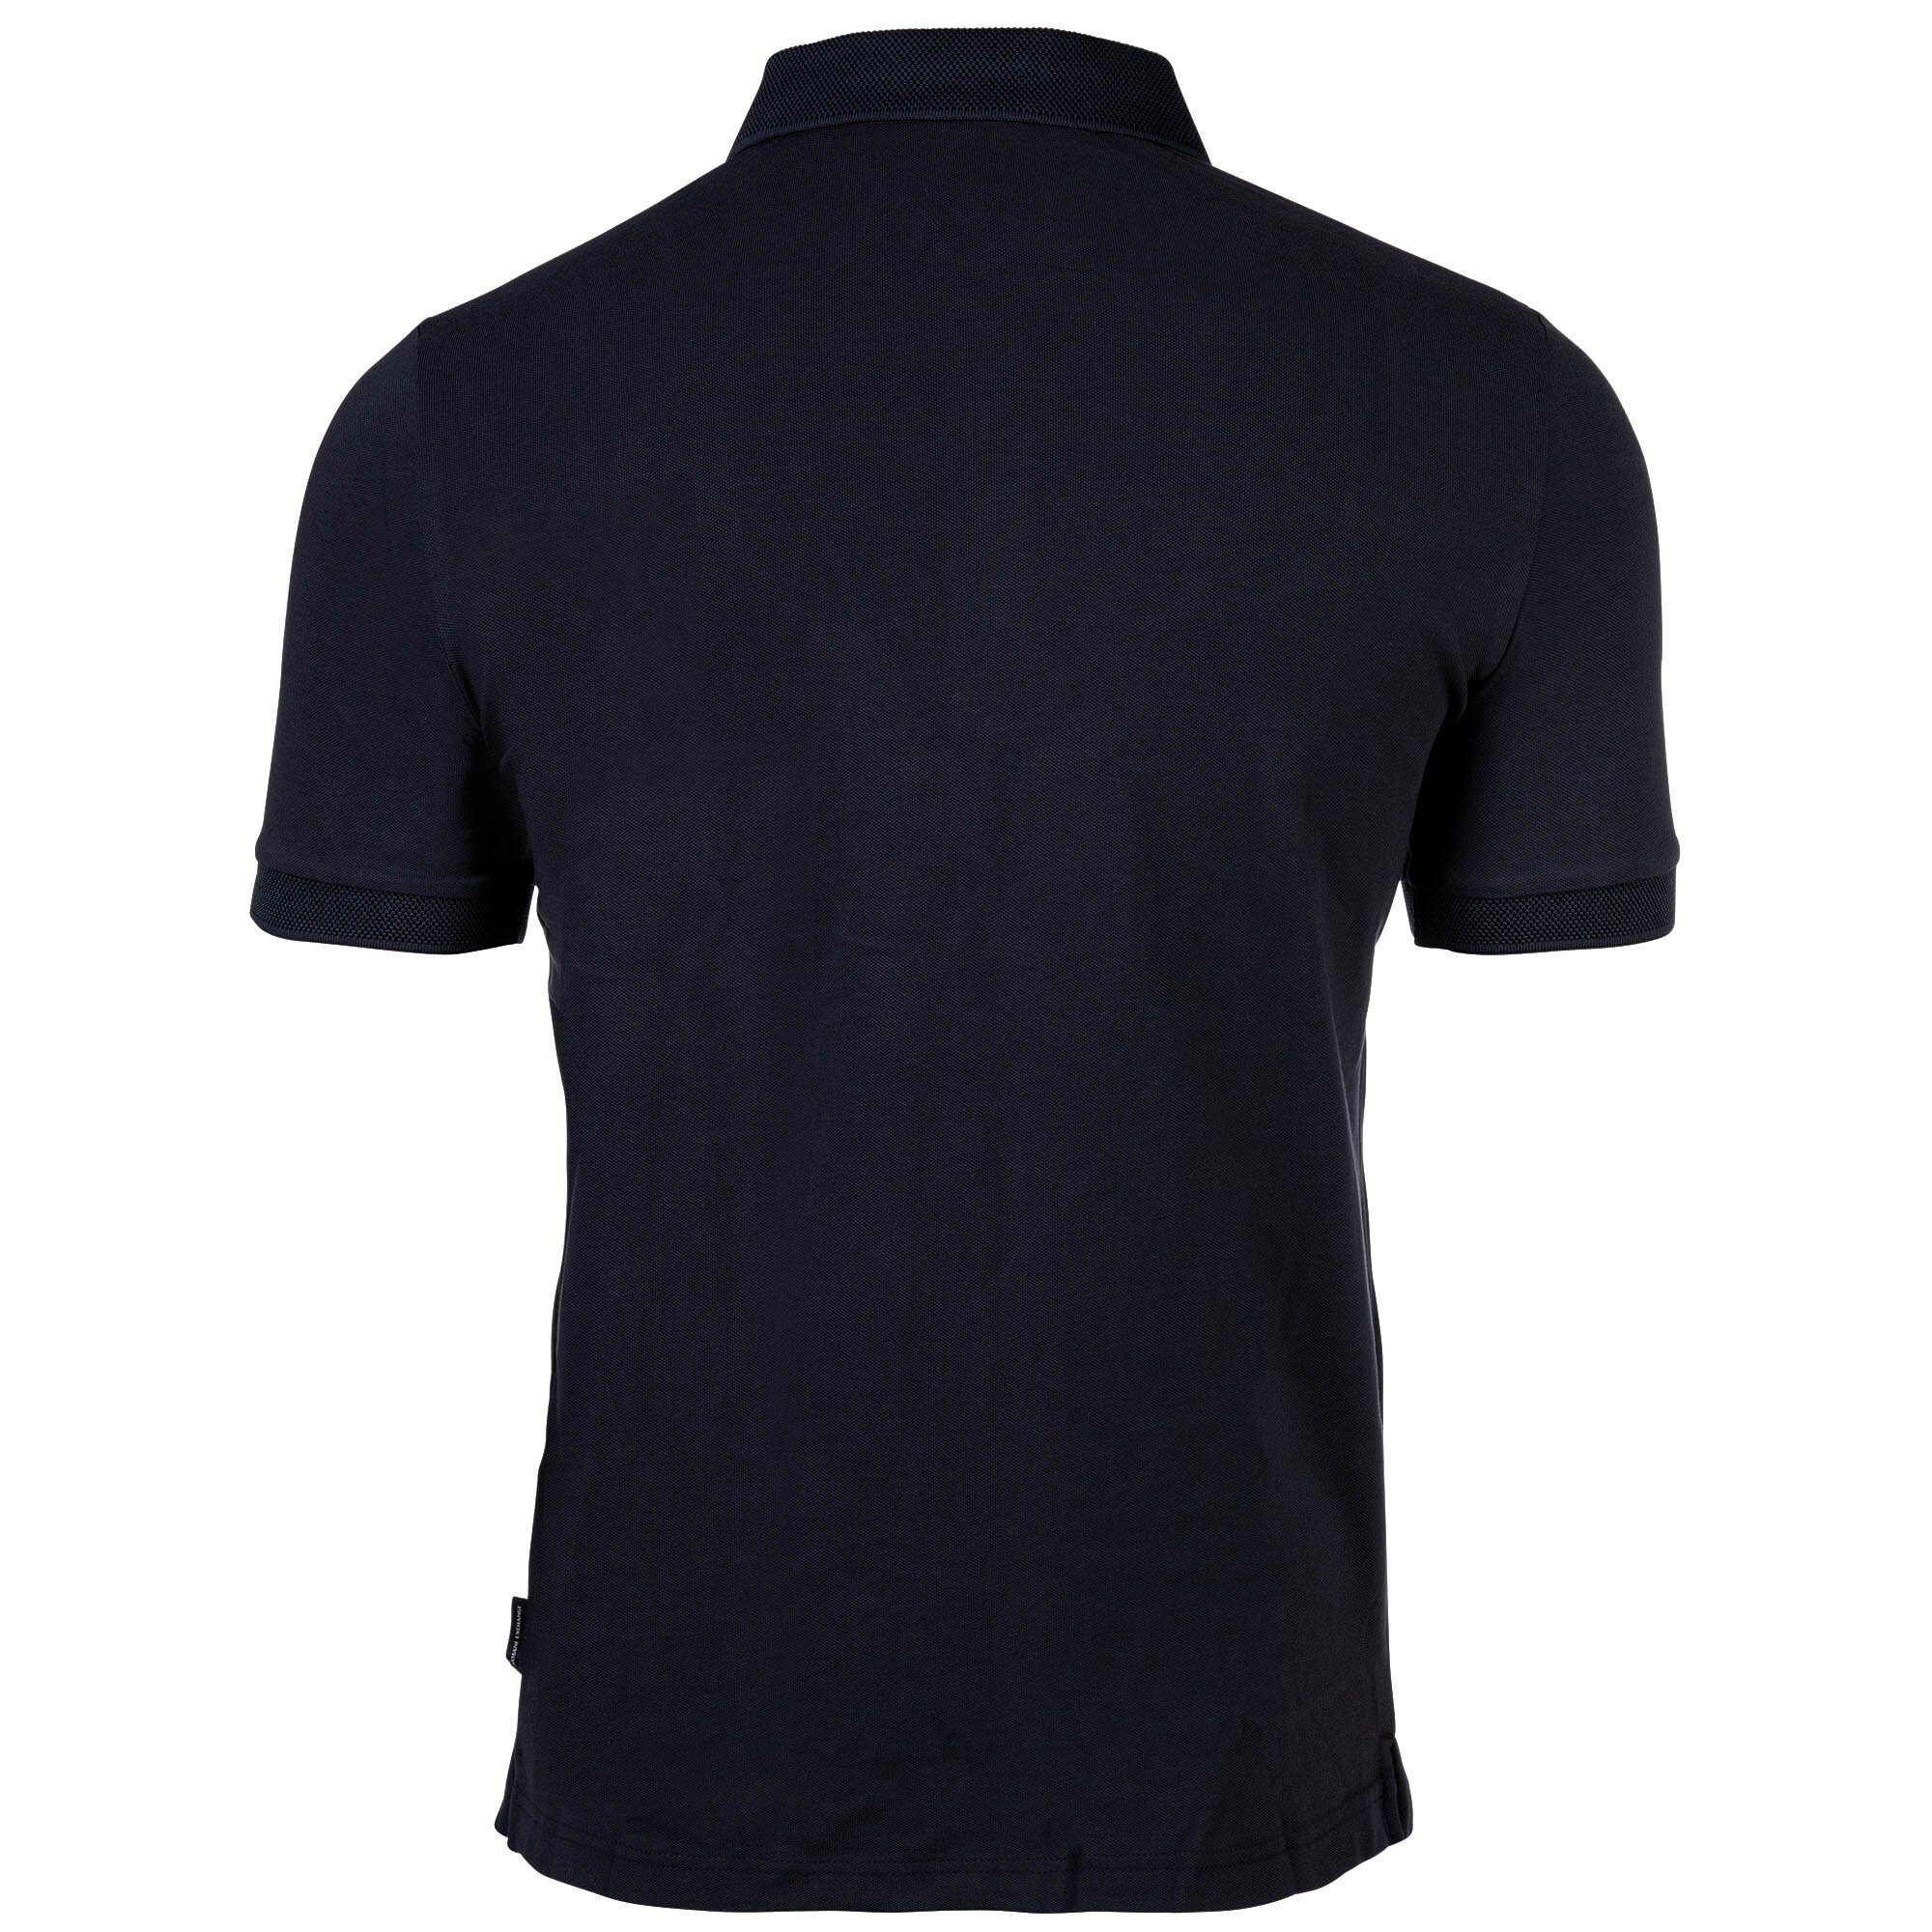 ARMANI EXCHANGE Poloshirt Herren Slim Poloshirt Marine Cotton - fit, einfarbig